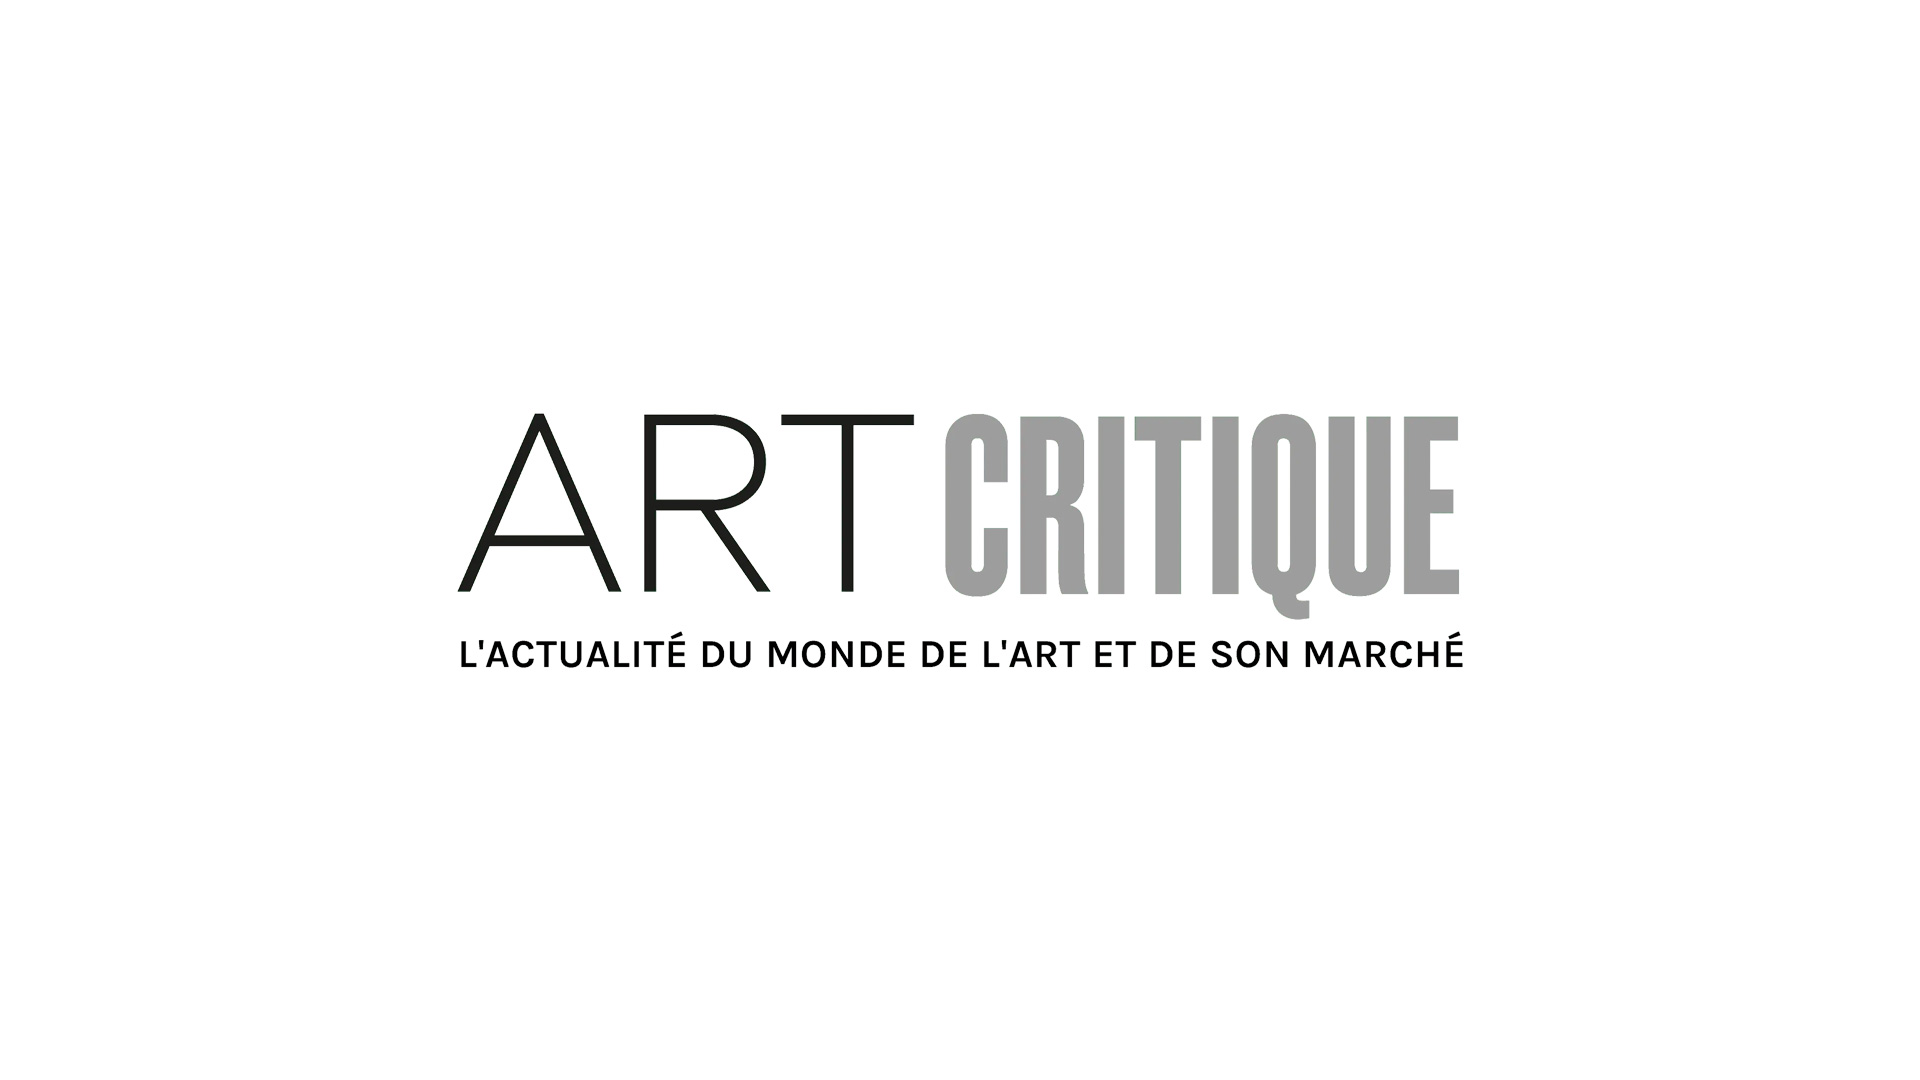 In memoriam: fantastical French sculptor and designer Claude Lalanne (1924-2019)